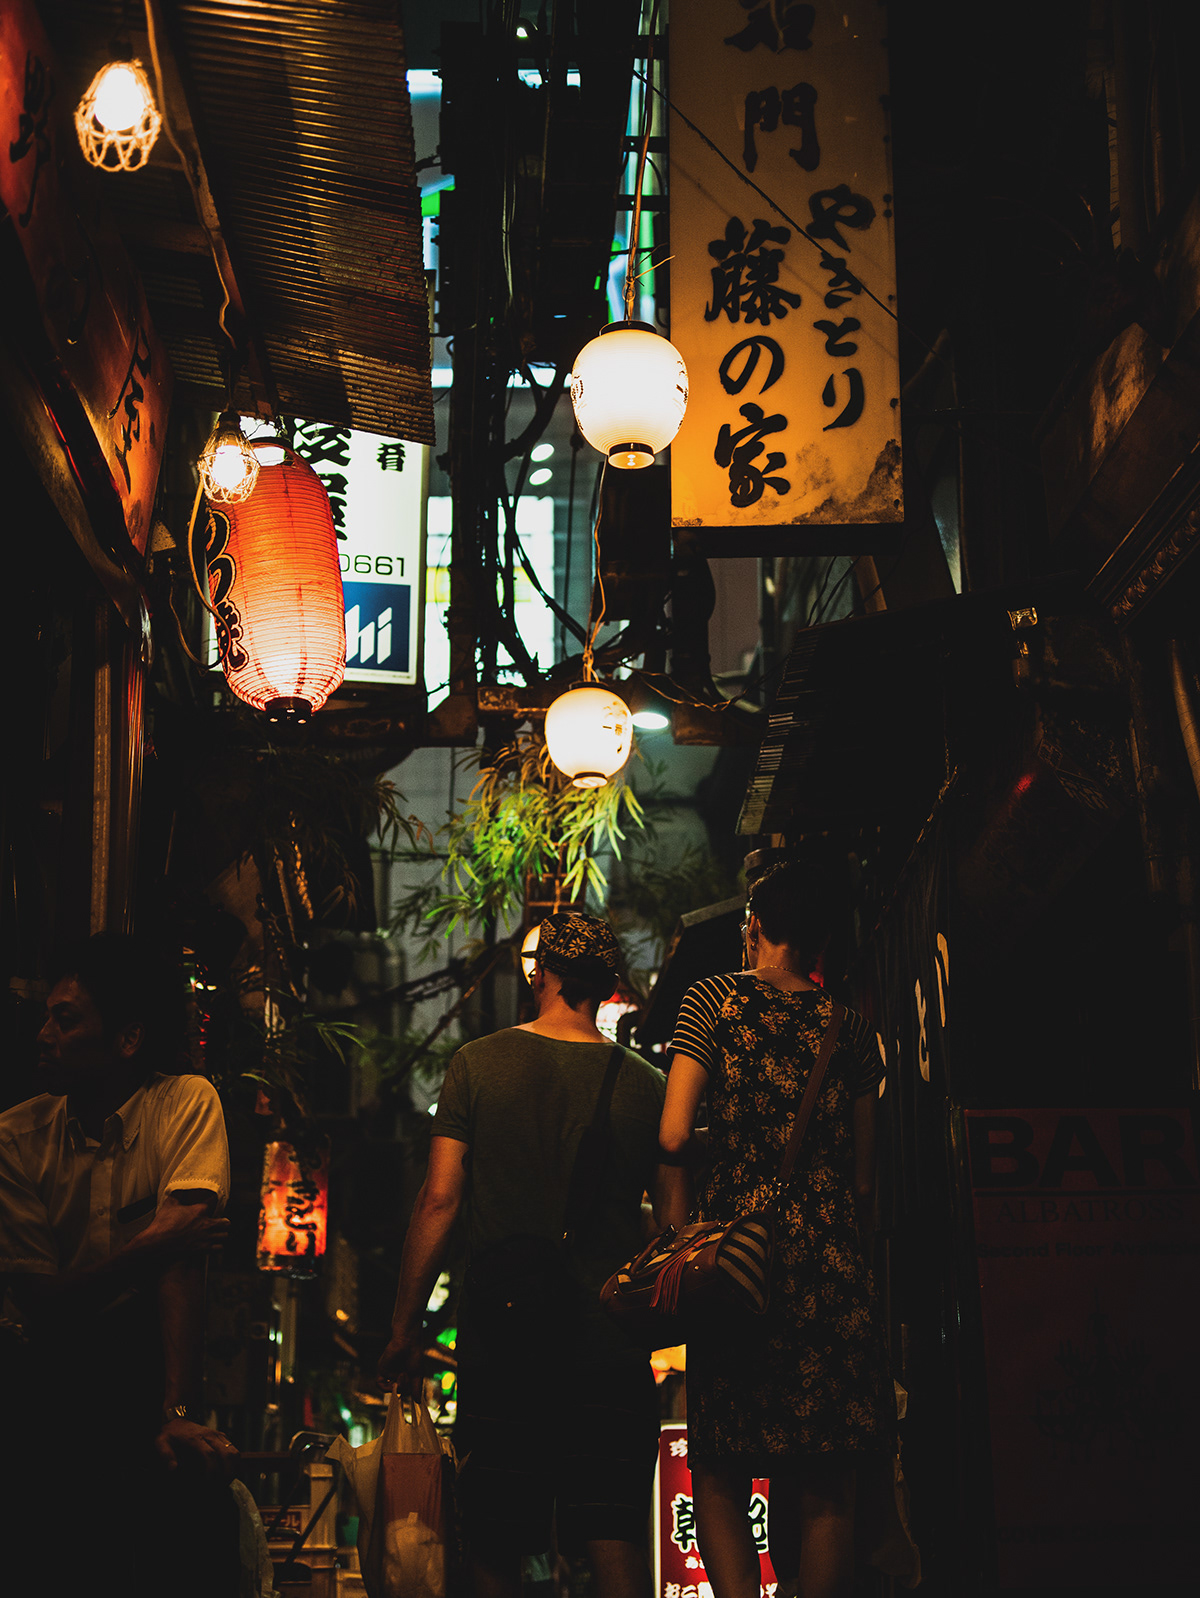 Tokyo Alley on Behance